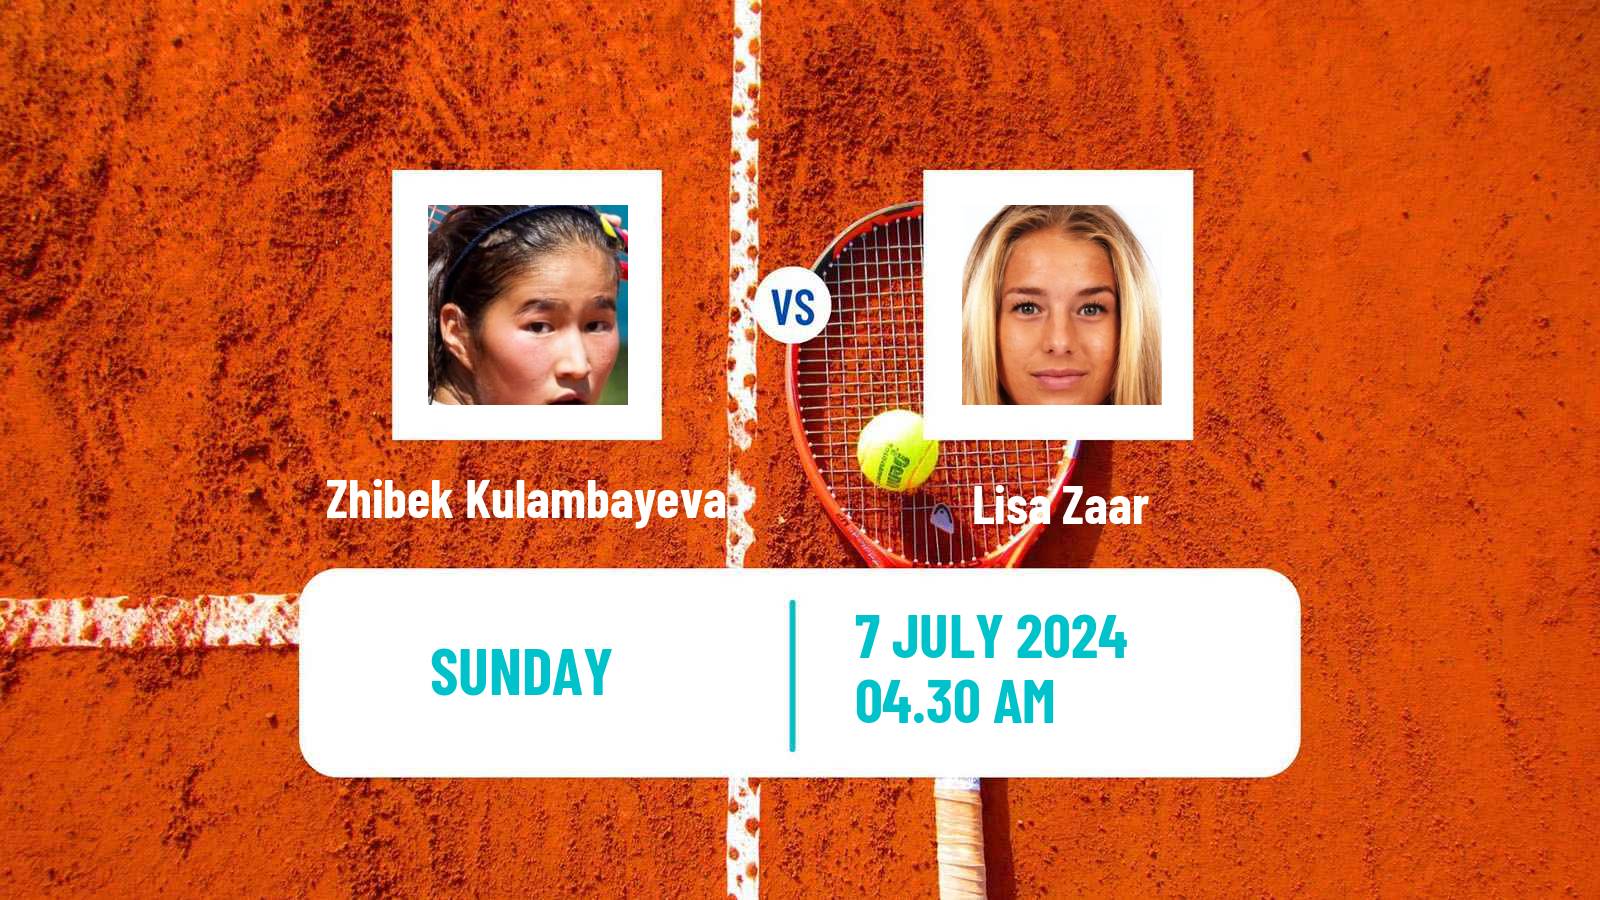 Tennis ITF W15 Kursumlijska Banja 10 Women Zhibek Kulambayeva - Lisa Zaar